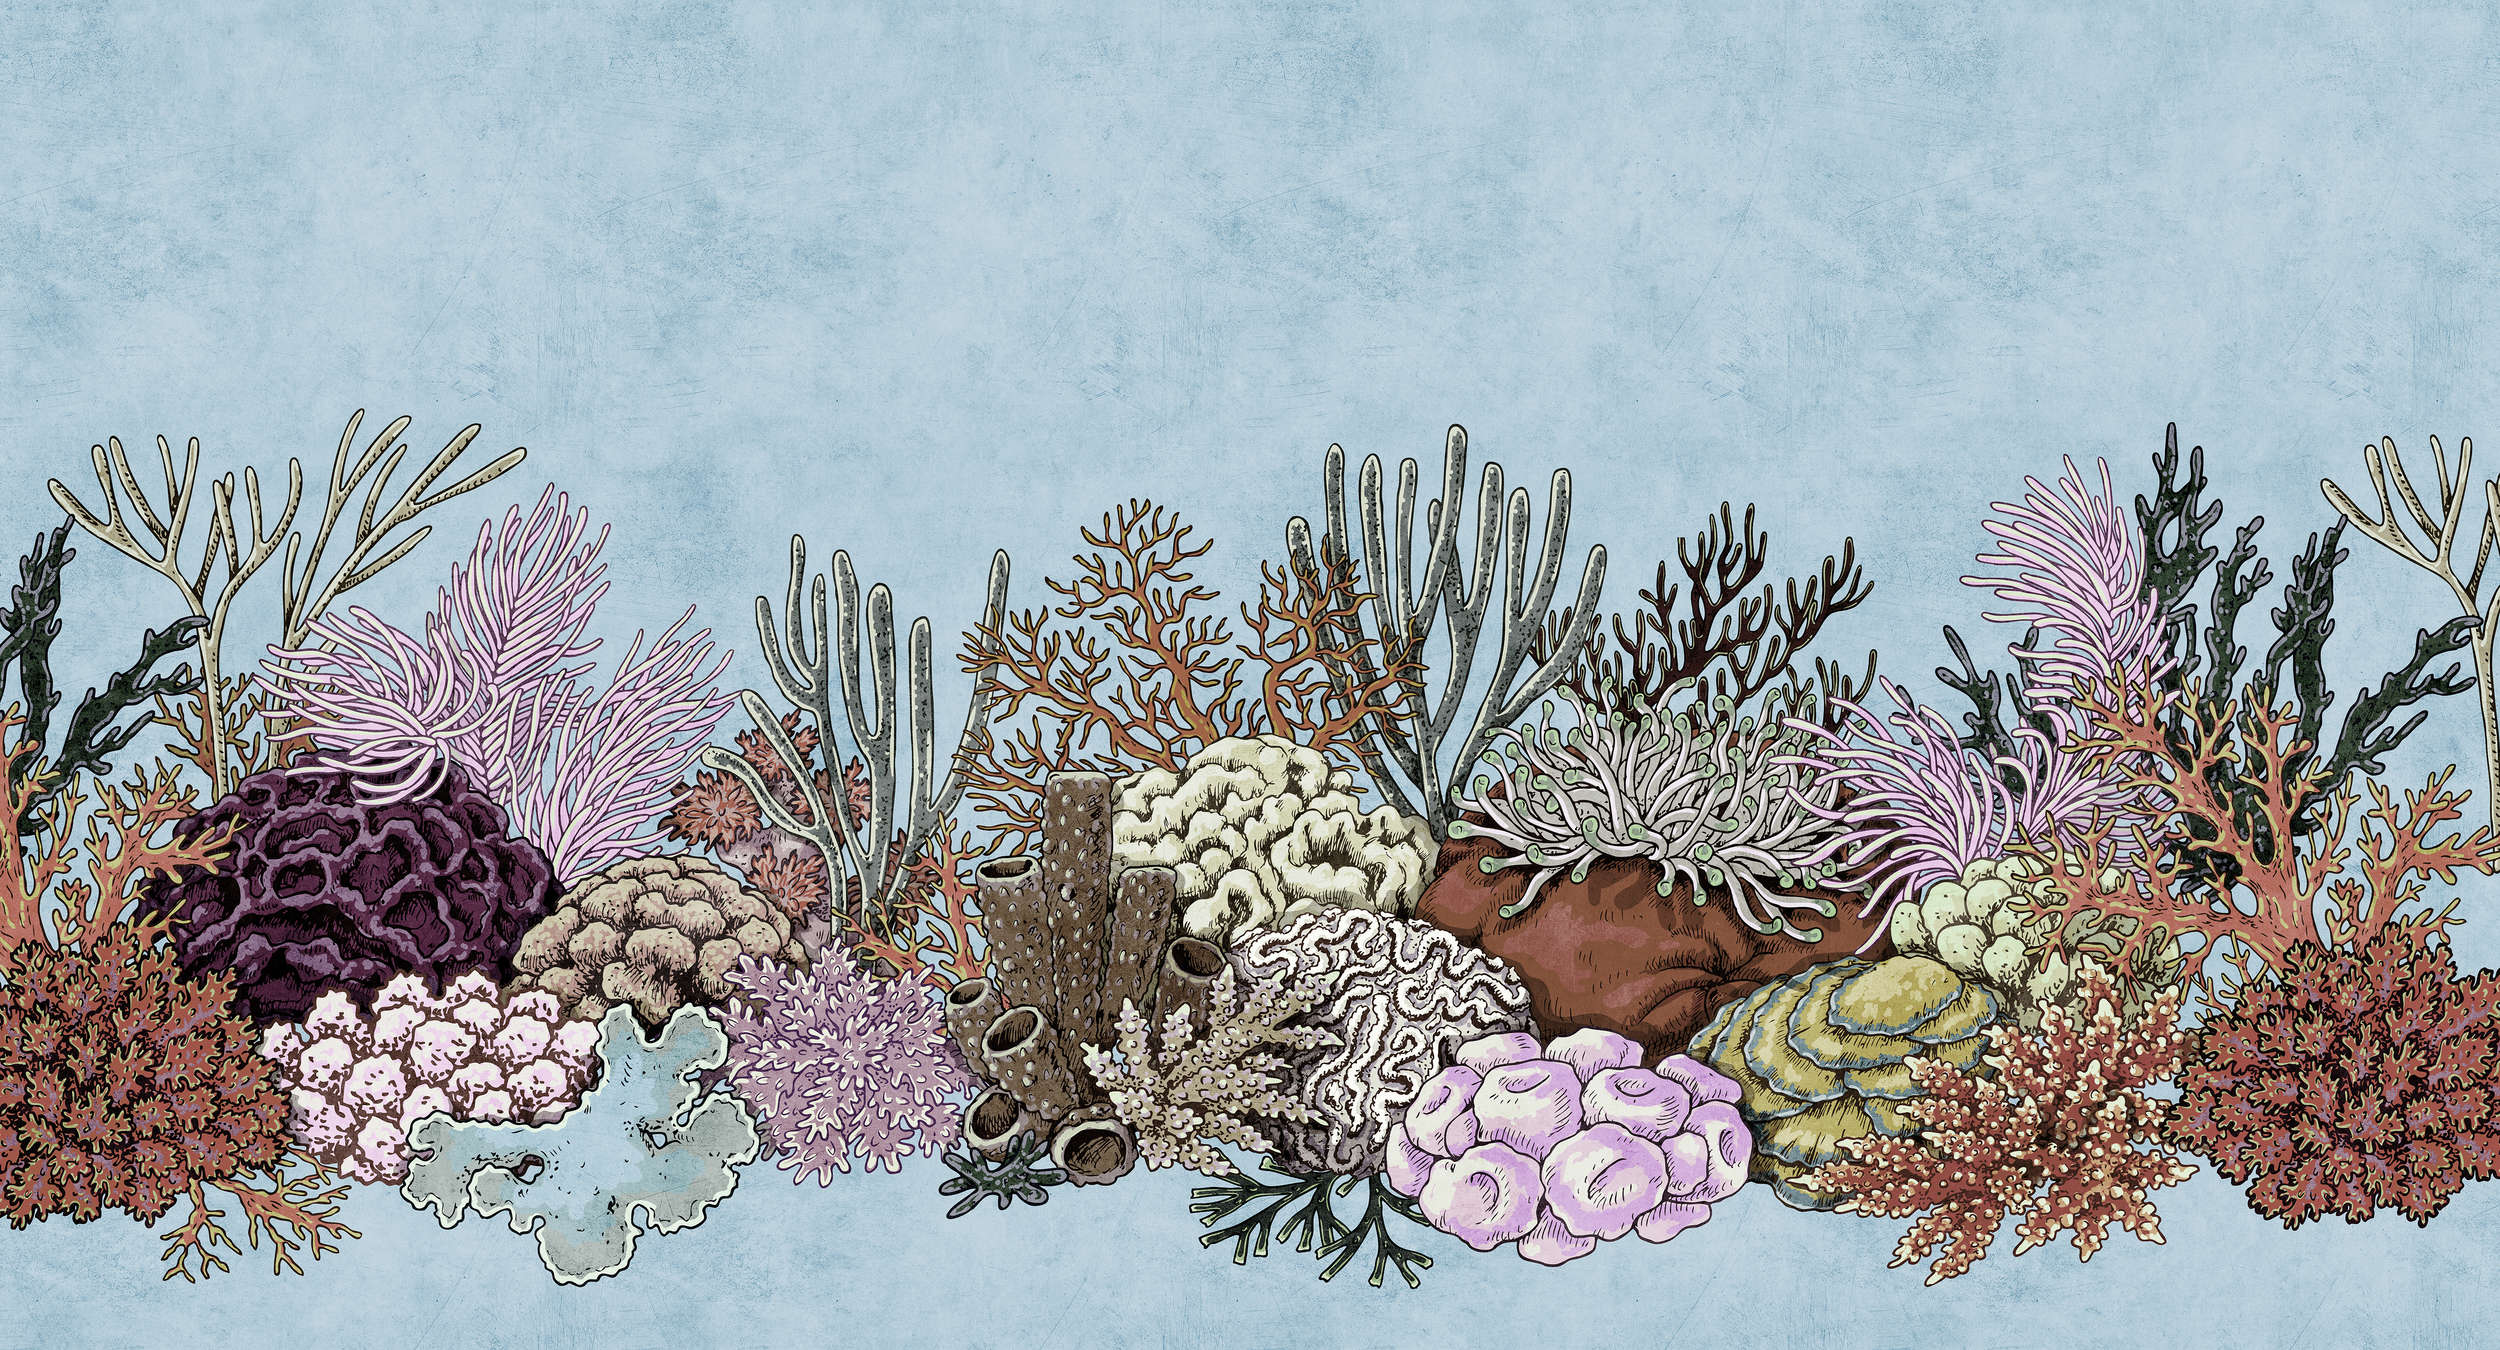             Octopus's Garden 1 - Underwater wallpaper with corals in blotting paper structure - blue, pink | mother-of-pearl smooth fleece
        